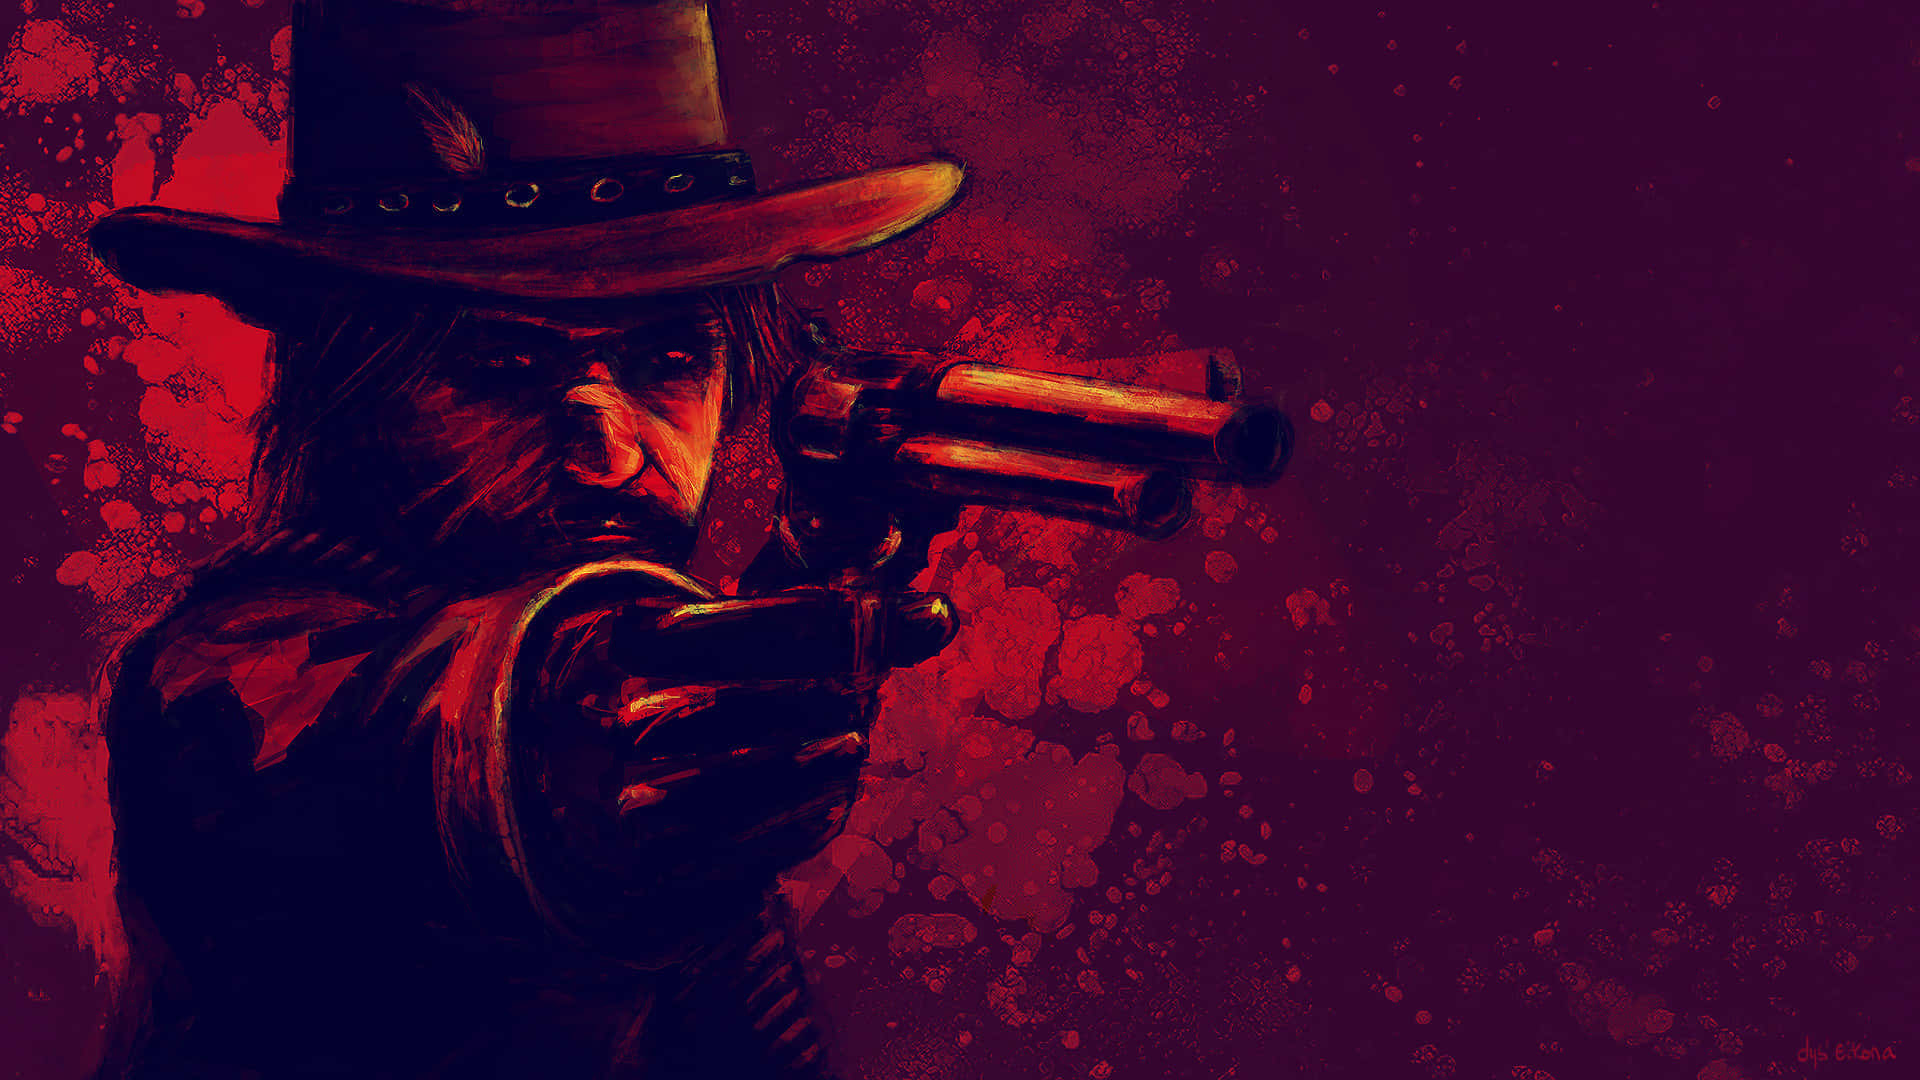 Rödrättvisa Sheriff 1920x1080 Red Dead Redemption 2 Bakgrund.